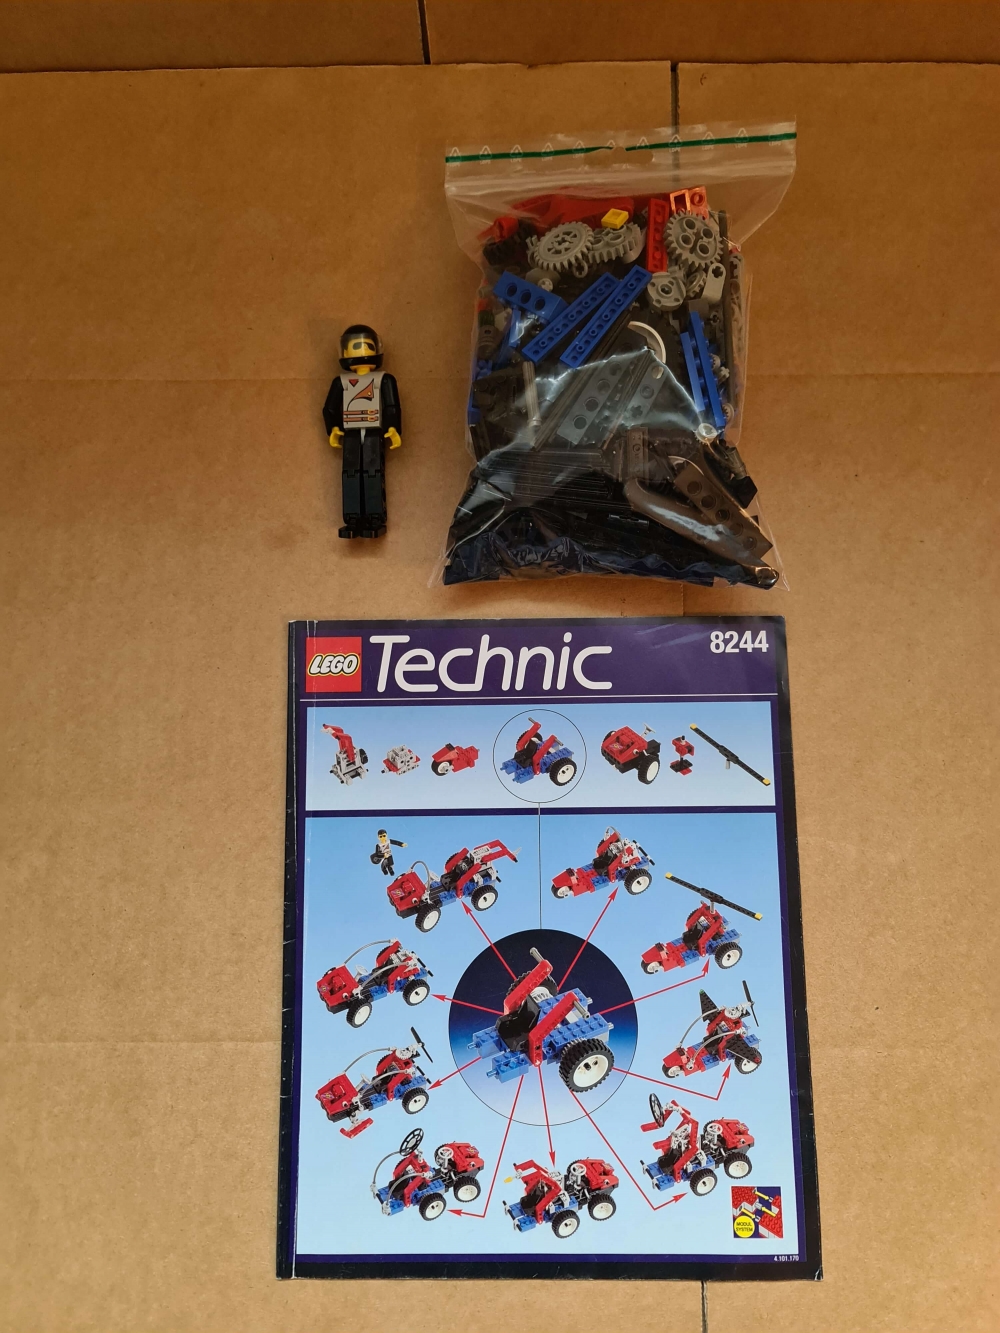 Sett 8244 fra Lego Technic serien.
Flott sett.
Komplett med manual.